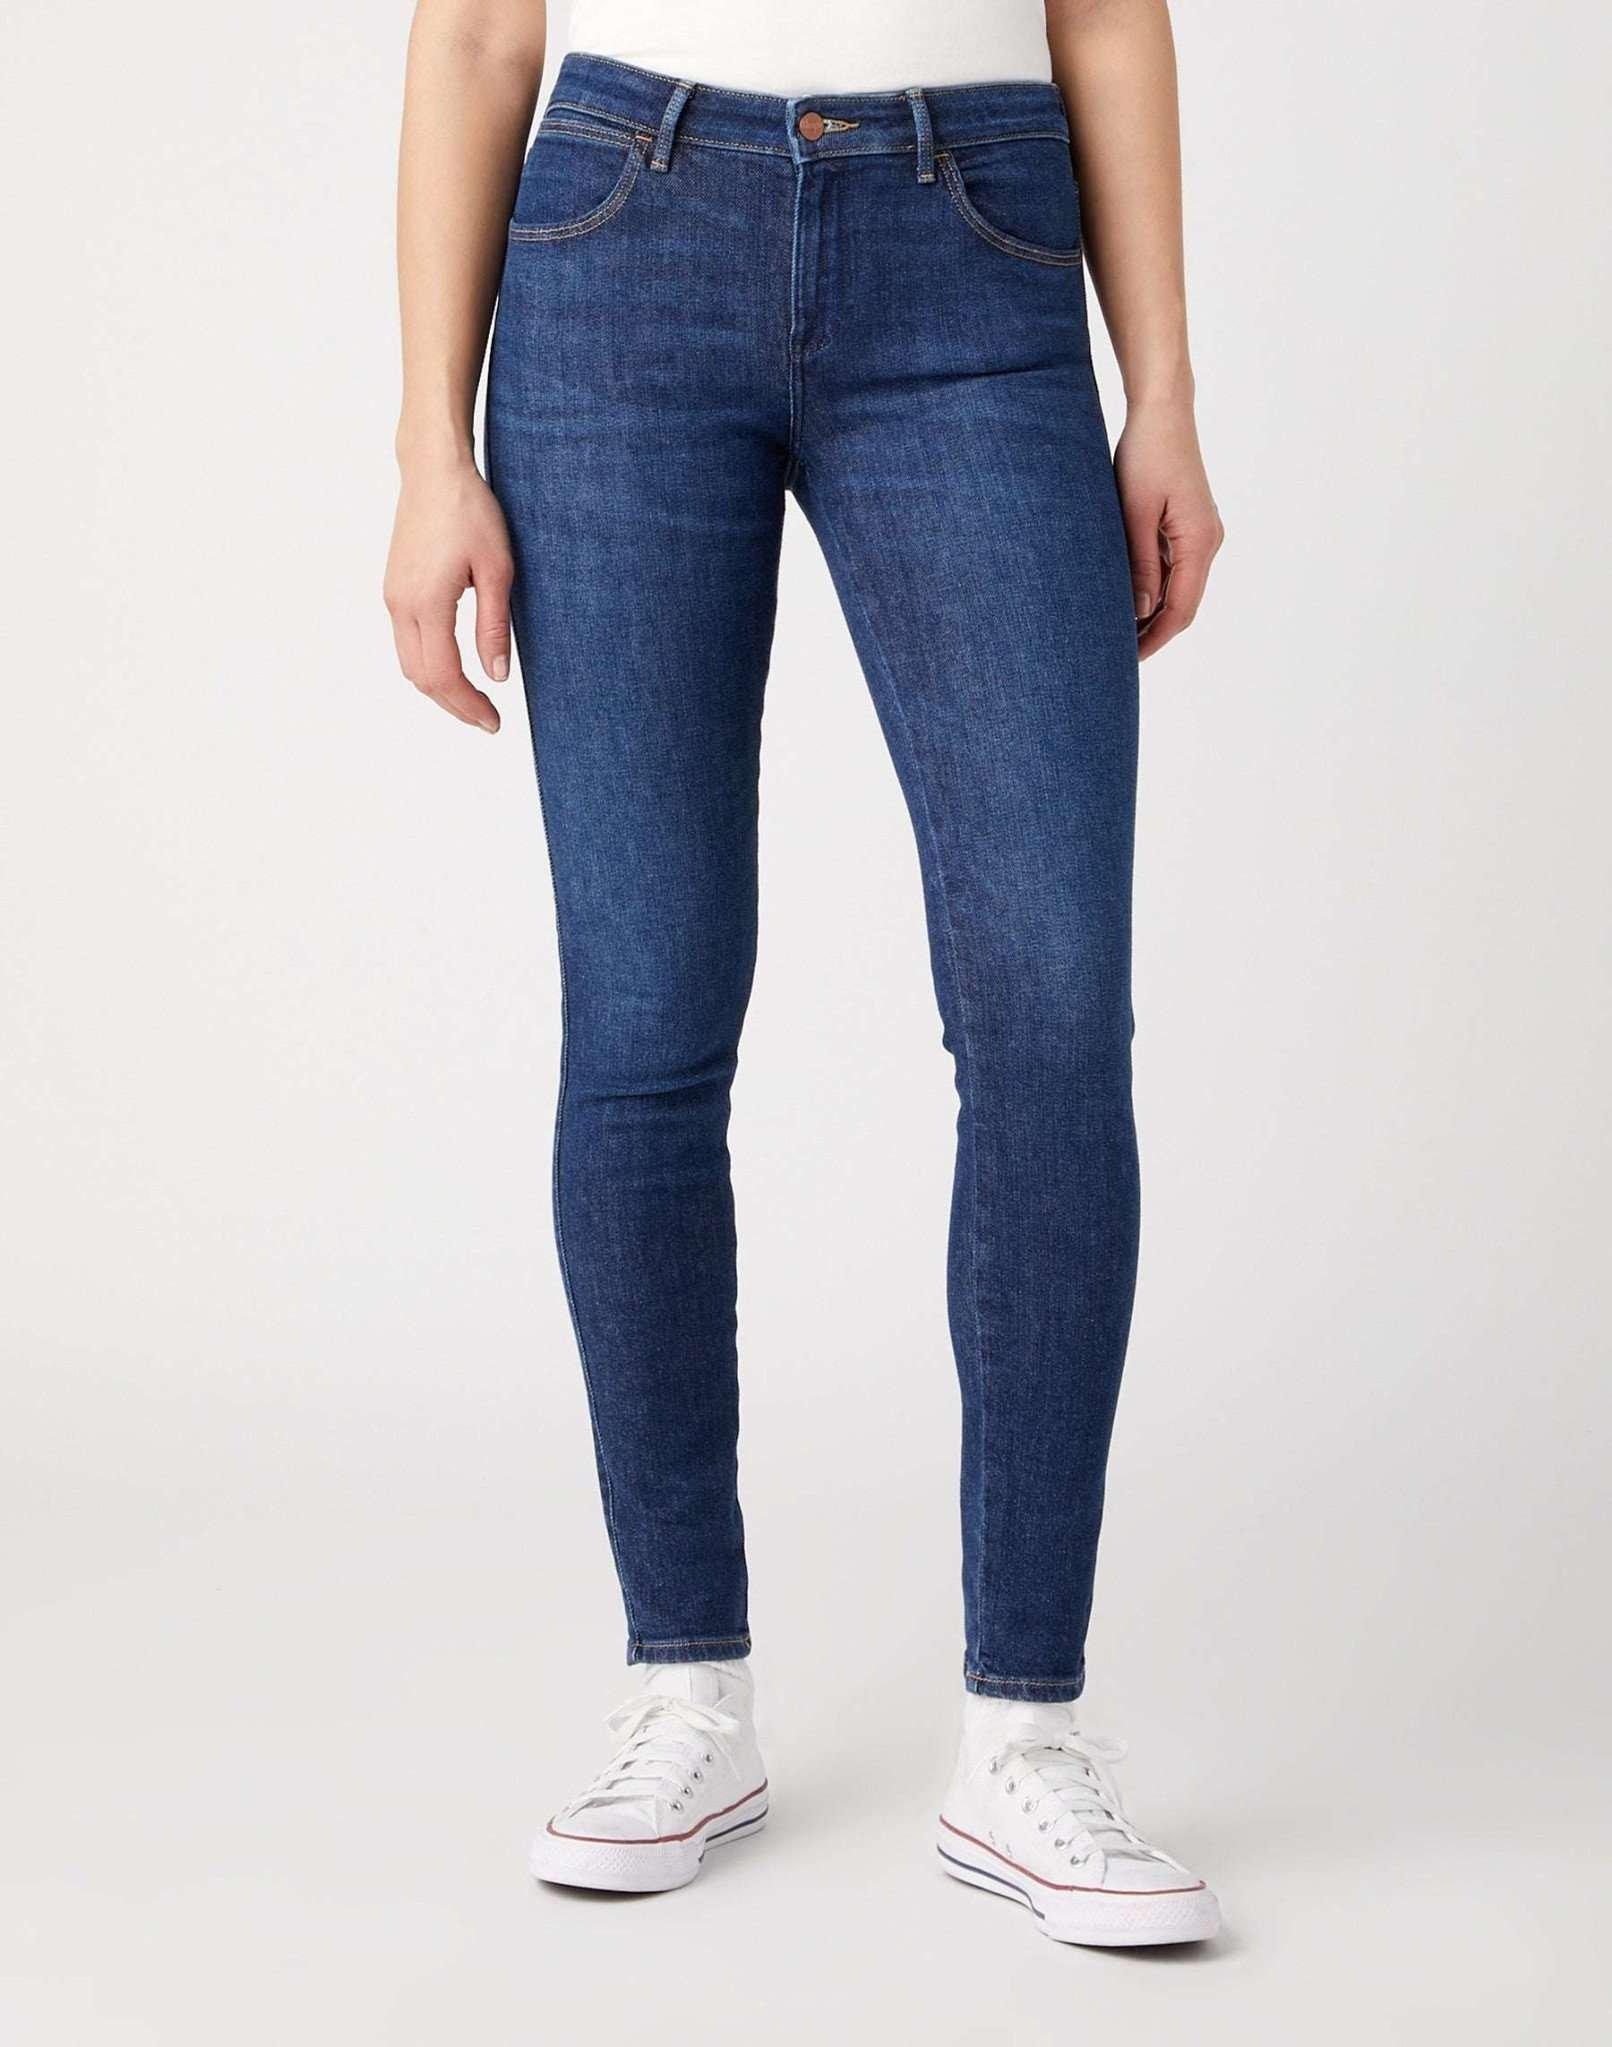 Jeans Skinny Fit Skinny Damen Blau L32/W28 von Wrangler